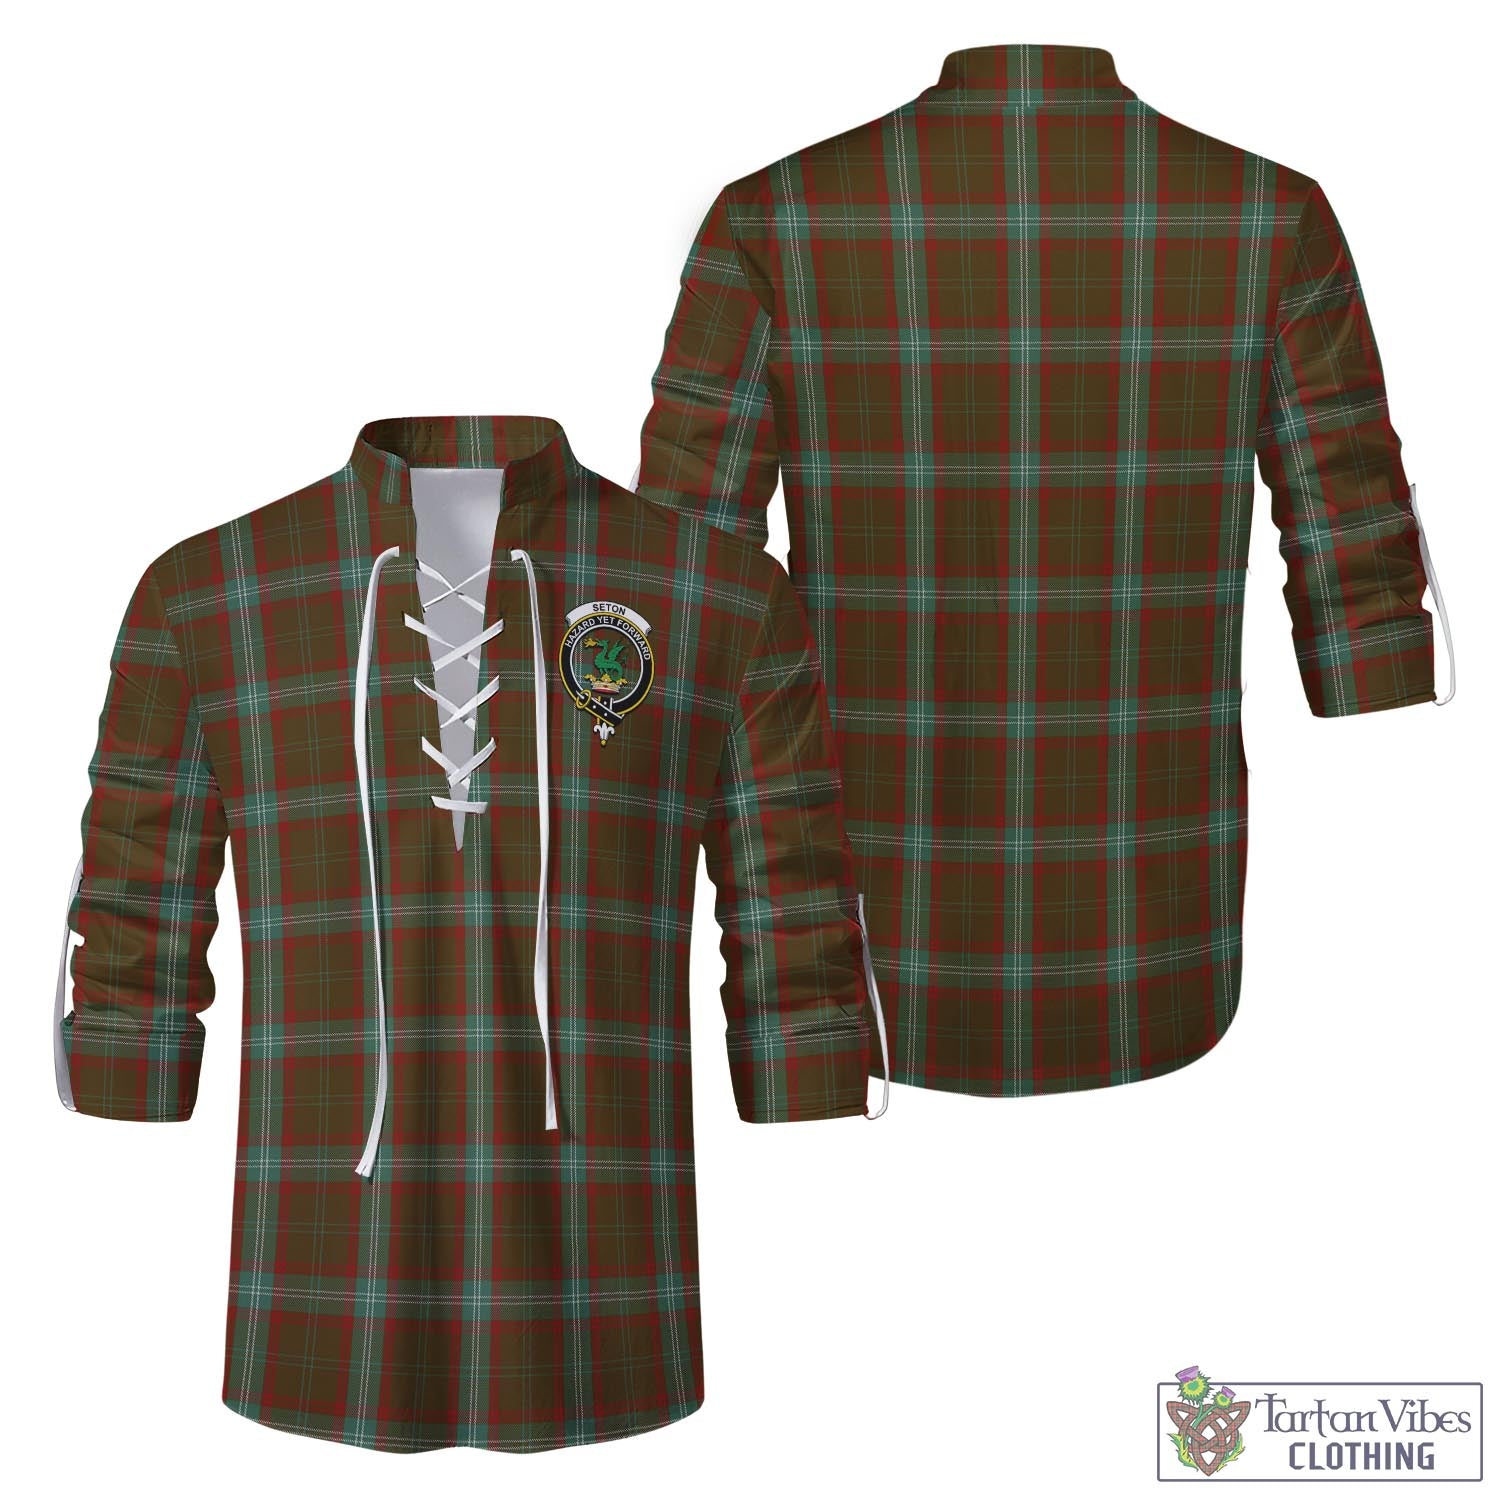 Tartan Vibes Clothing Seton Hunting Tartan Men's Scottish Traditional Jacobite Ghillie Kilt Shirt with Family Crest